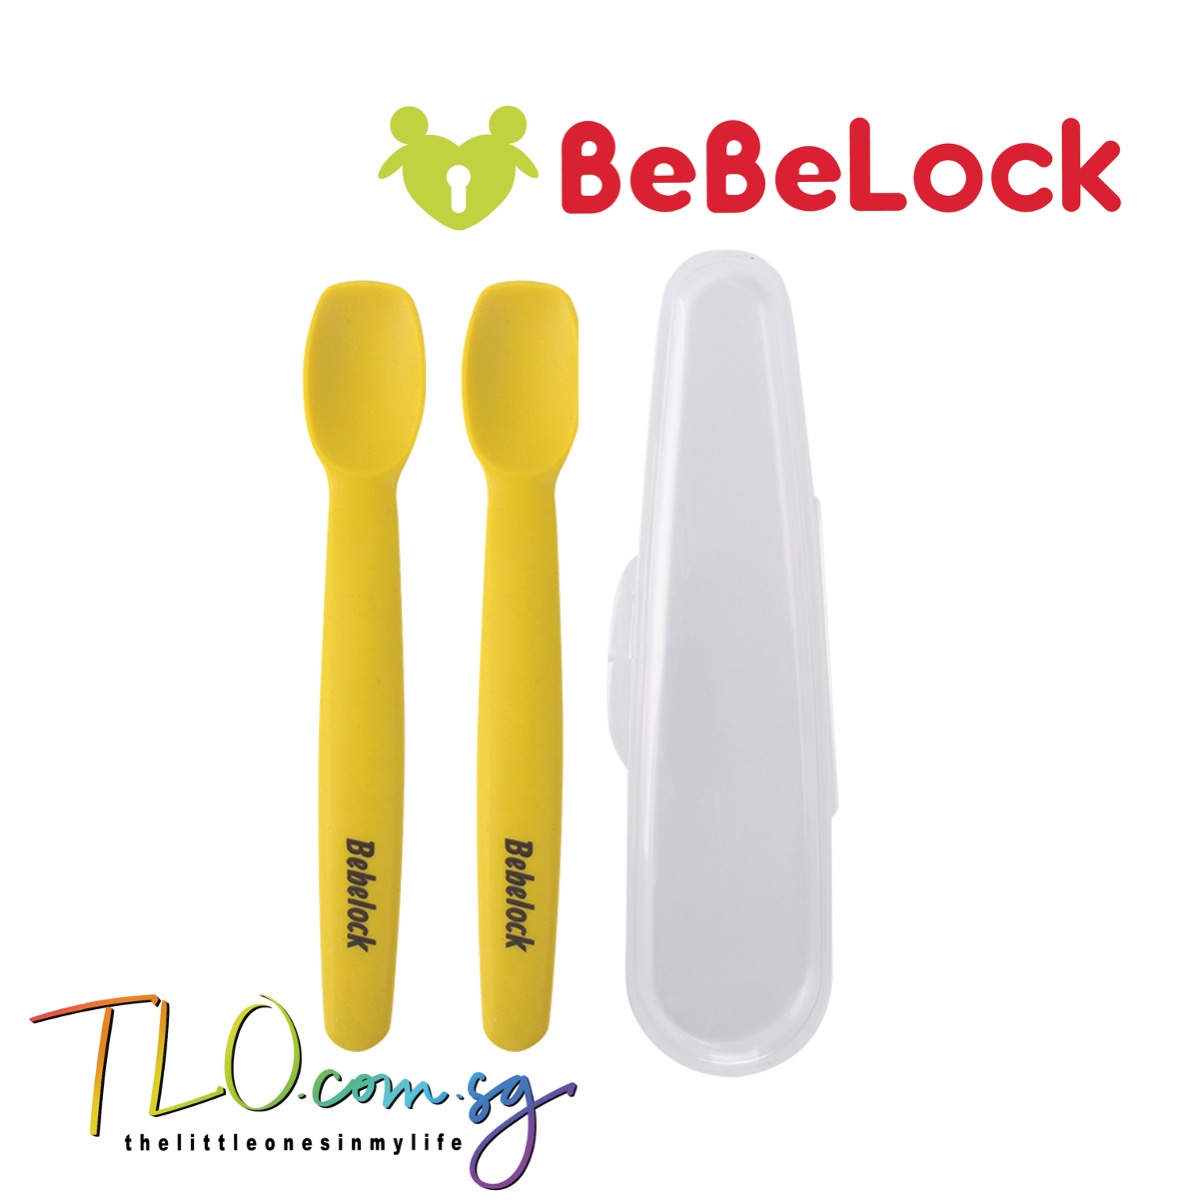 BeBeLock Alpha Silicone Twin Spoon + Case